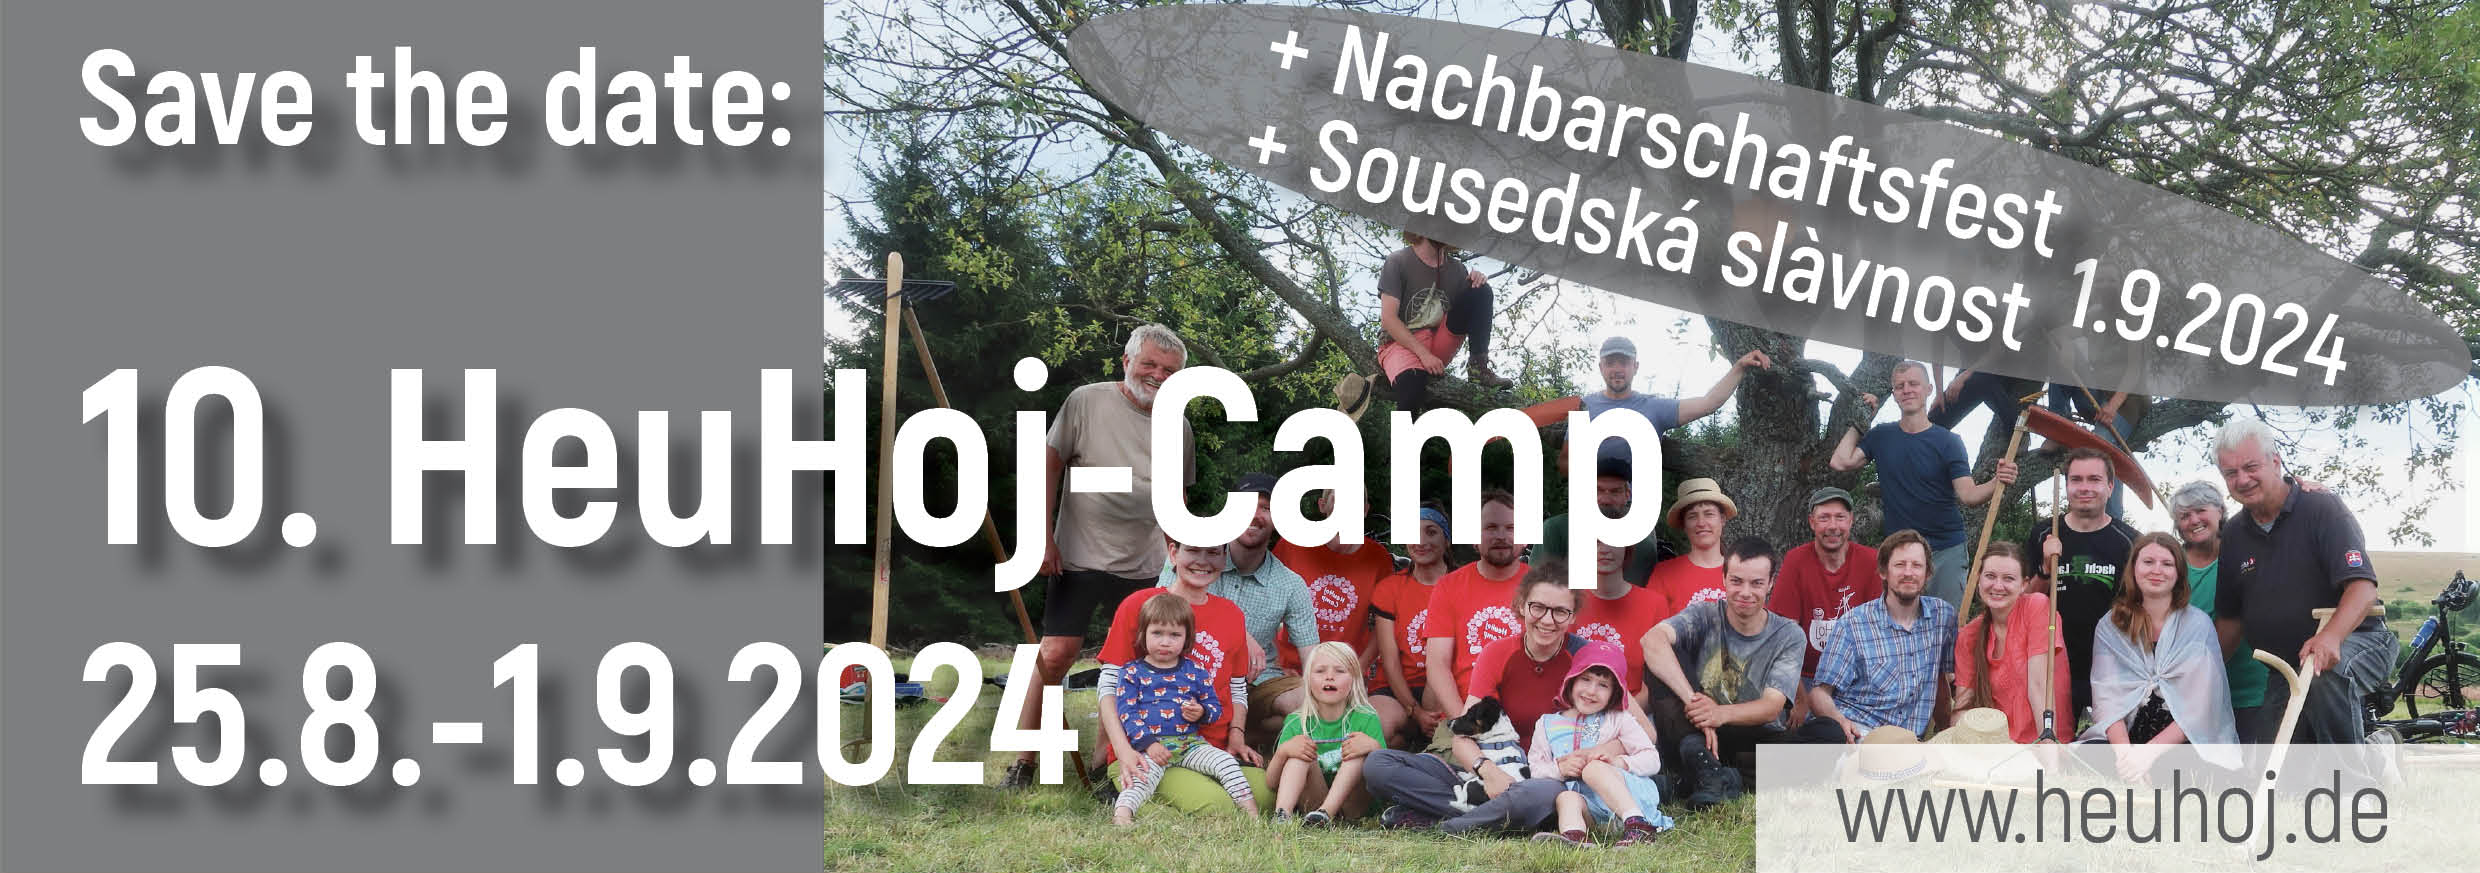 10. HeuHoj-Camp – Save the date: 25.8.-1.9.2024